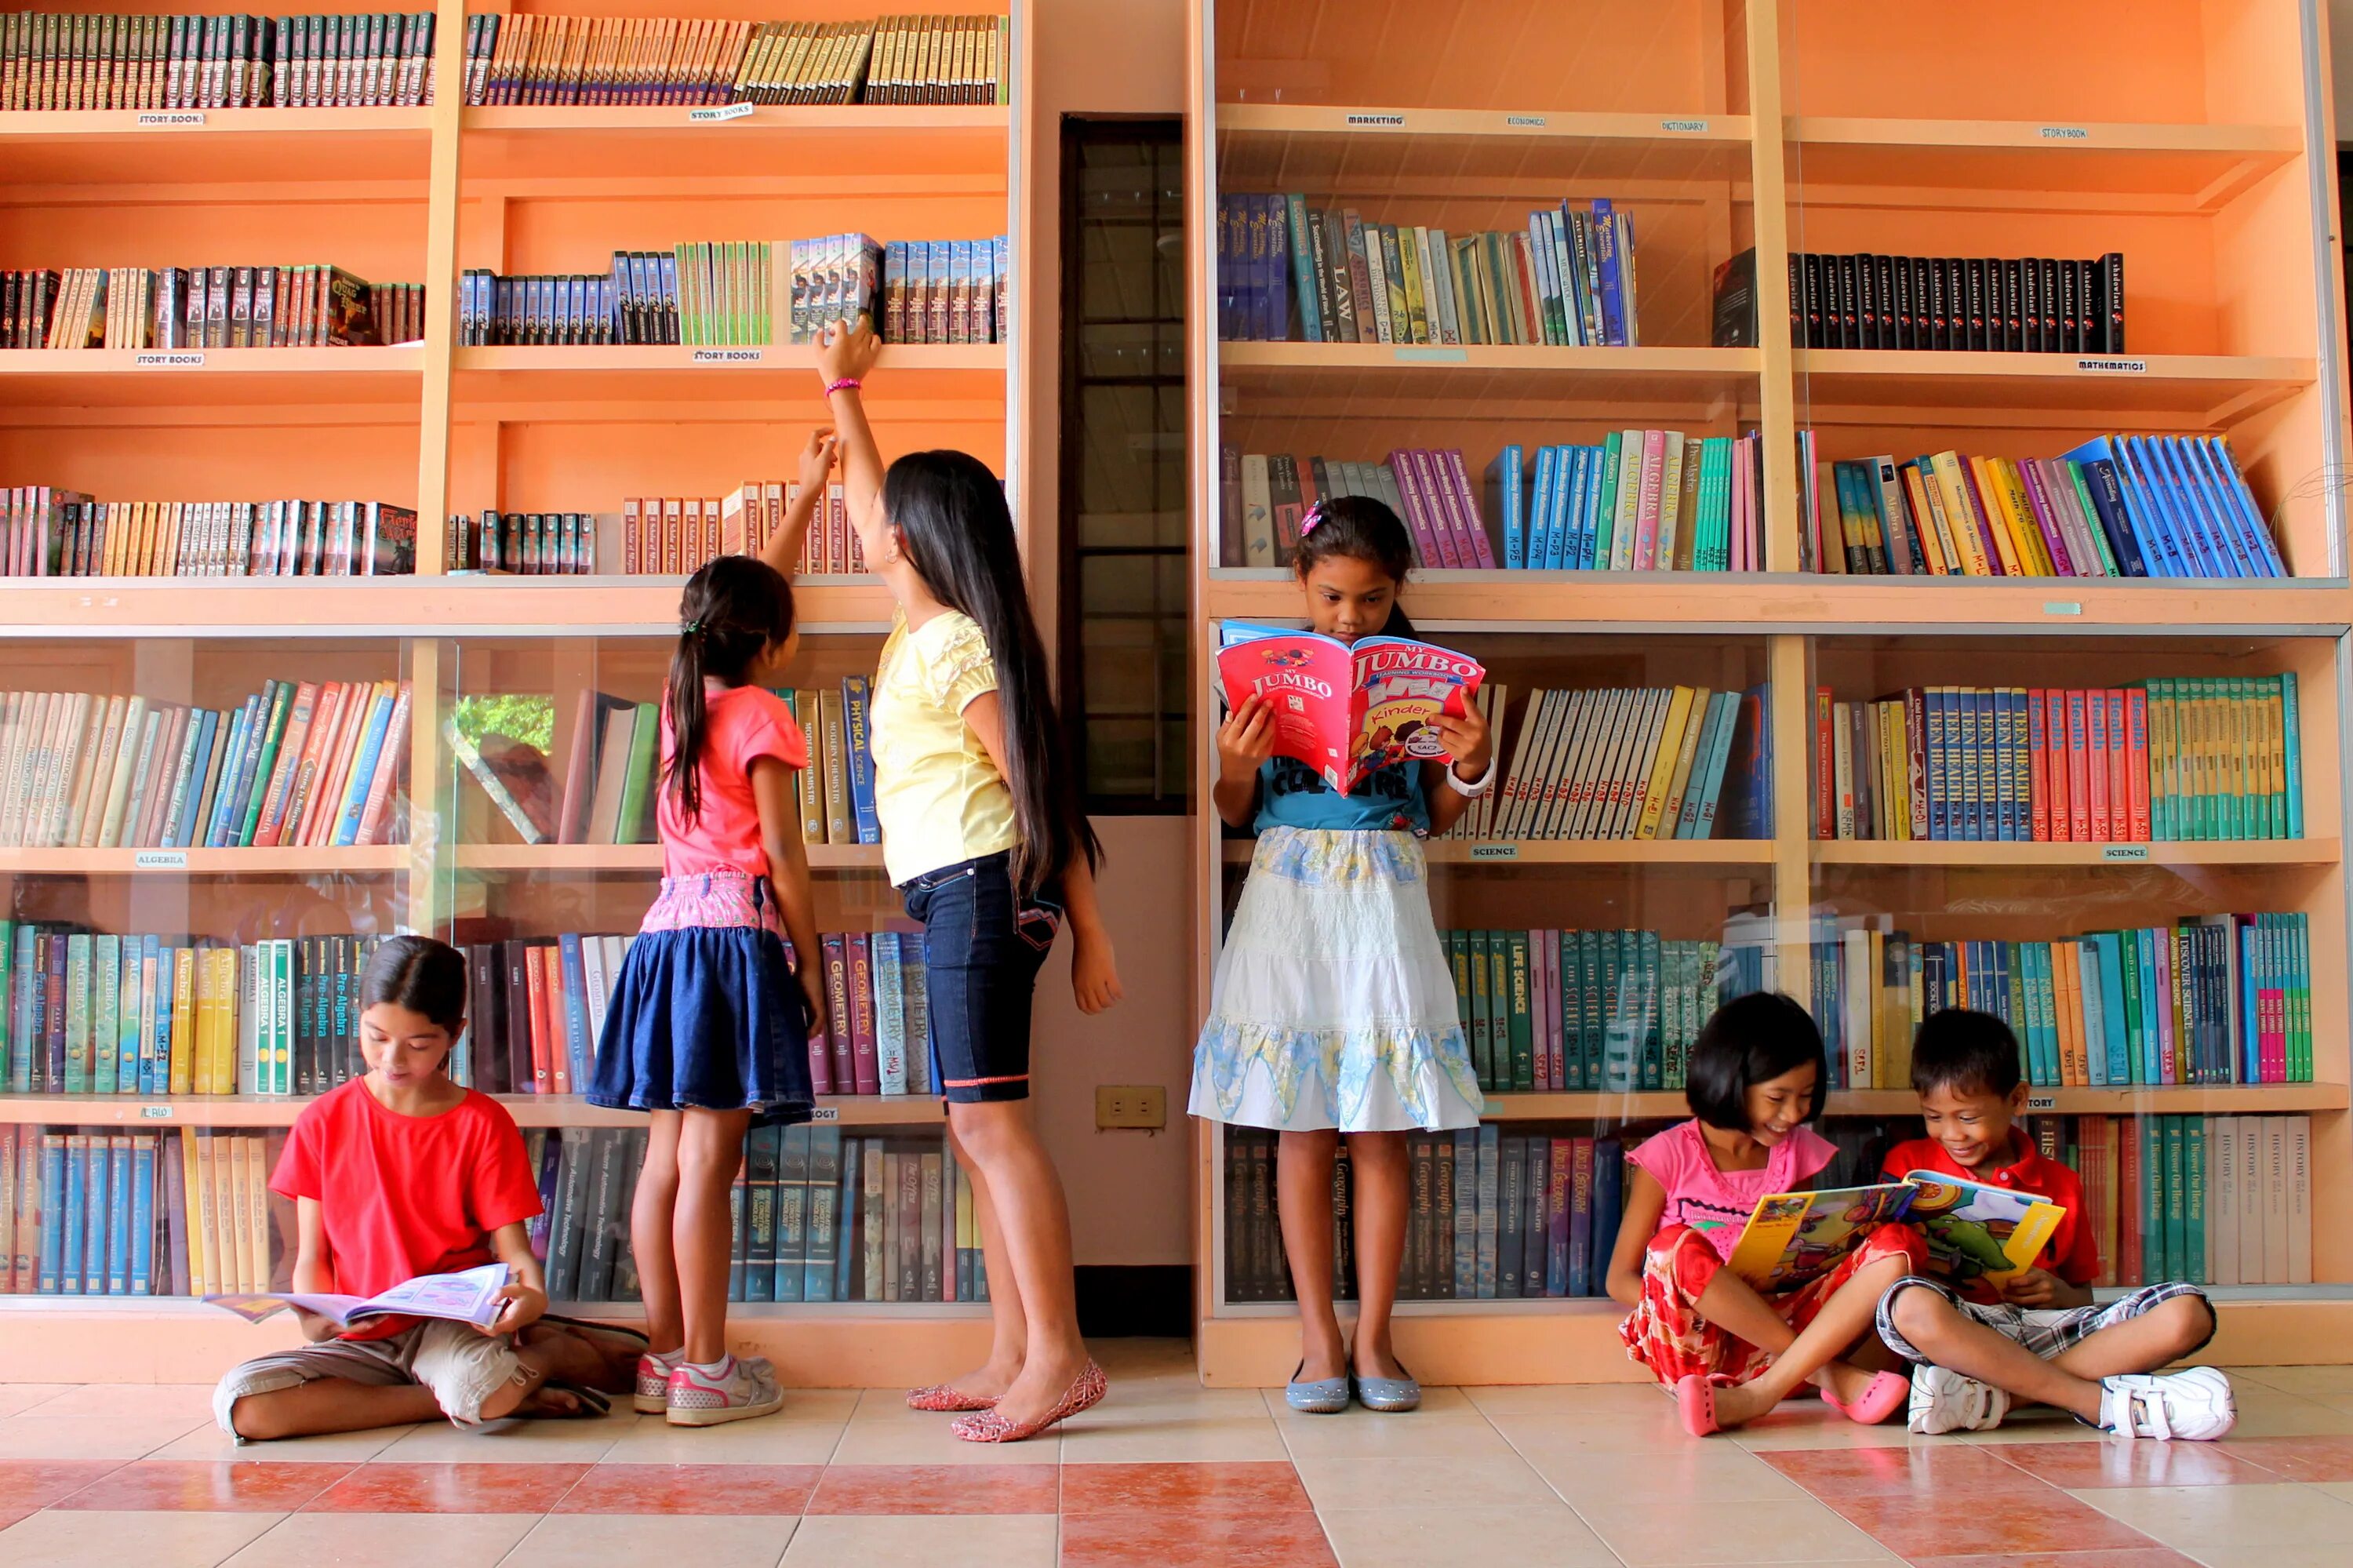 This is our library. Фотосессия в библиотеке дети. Дети в библиотеке. Здание библиотеки для детей. Детские библиотеки.